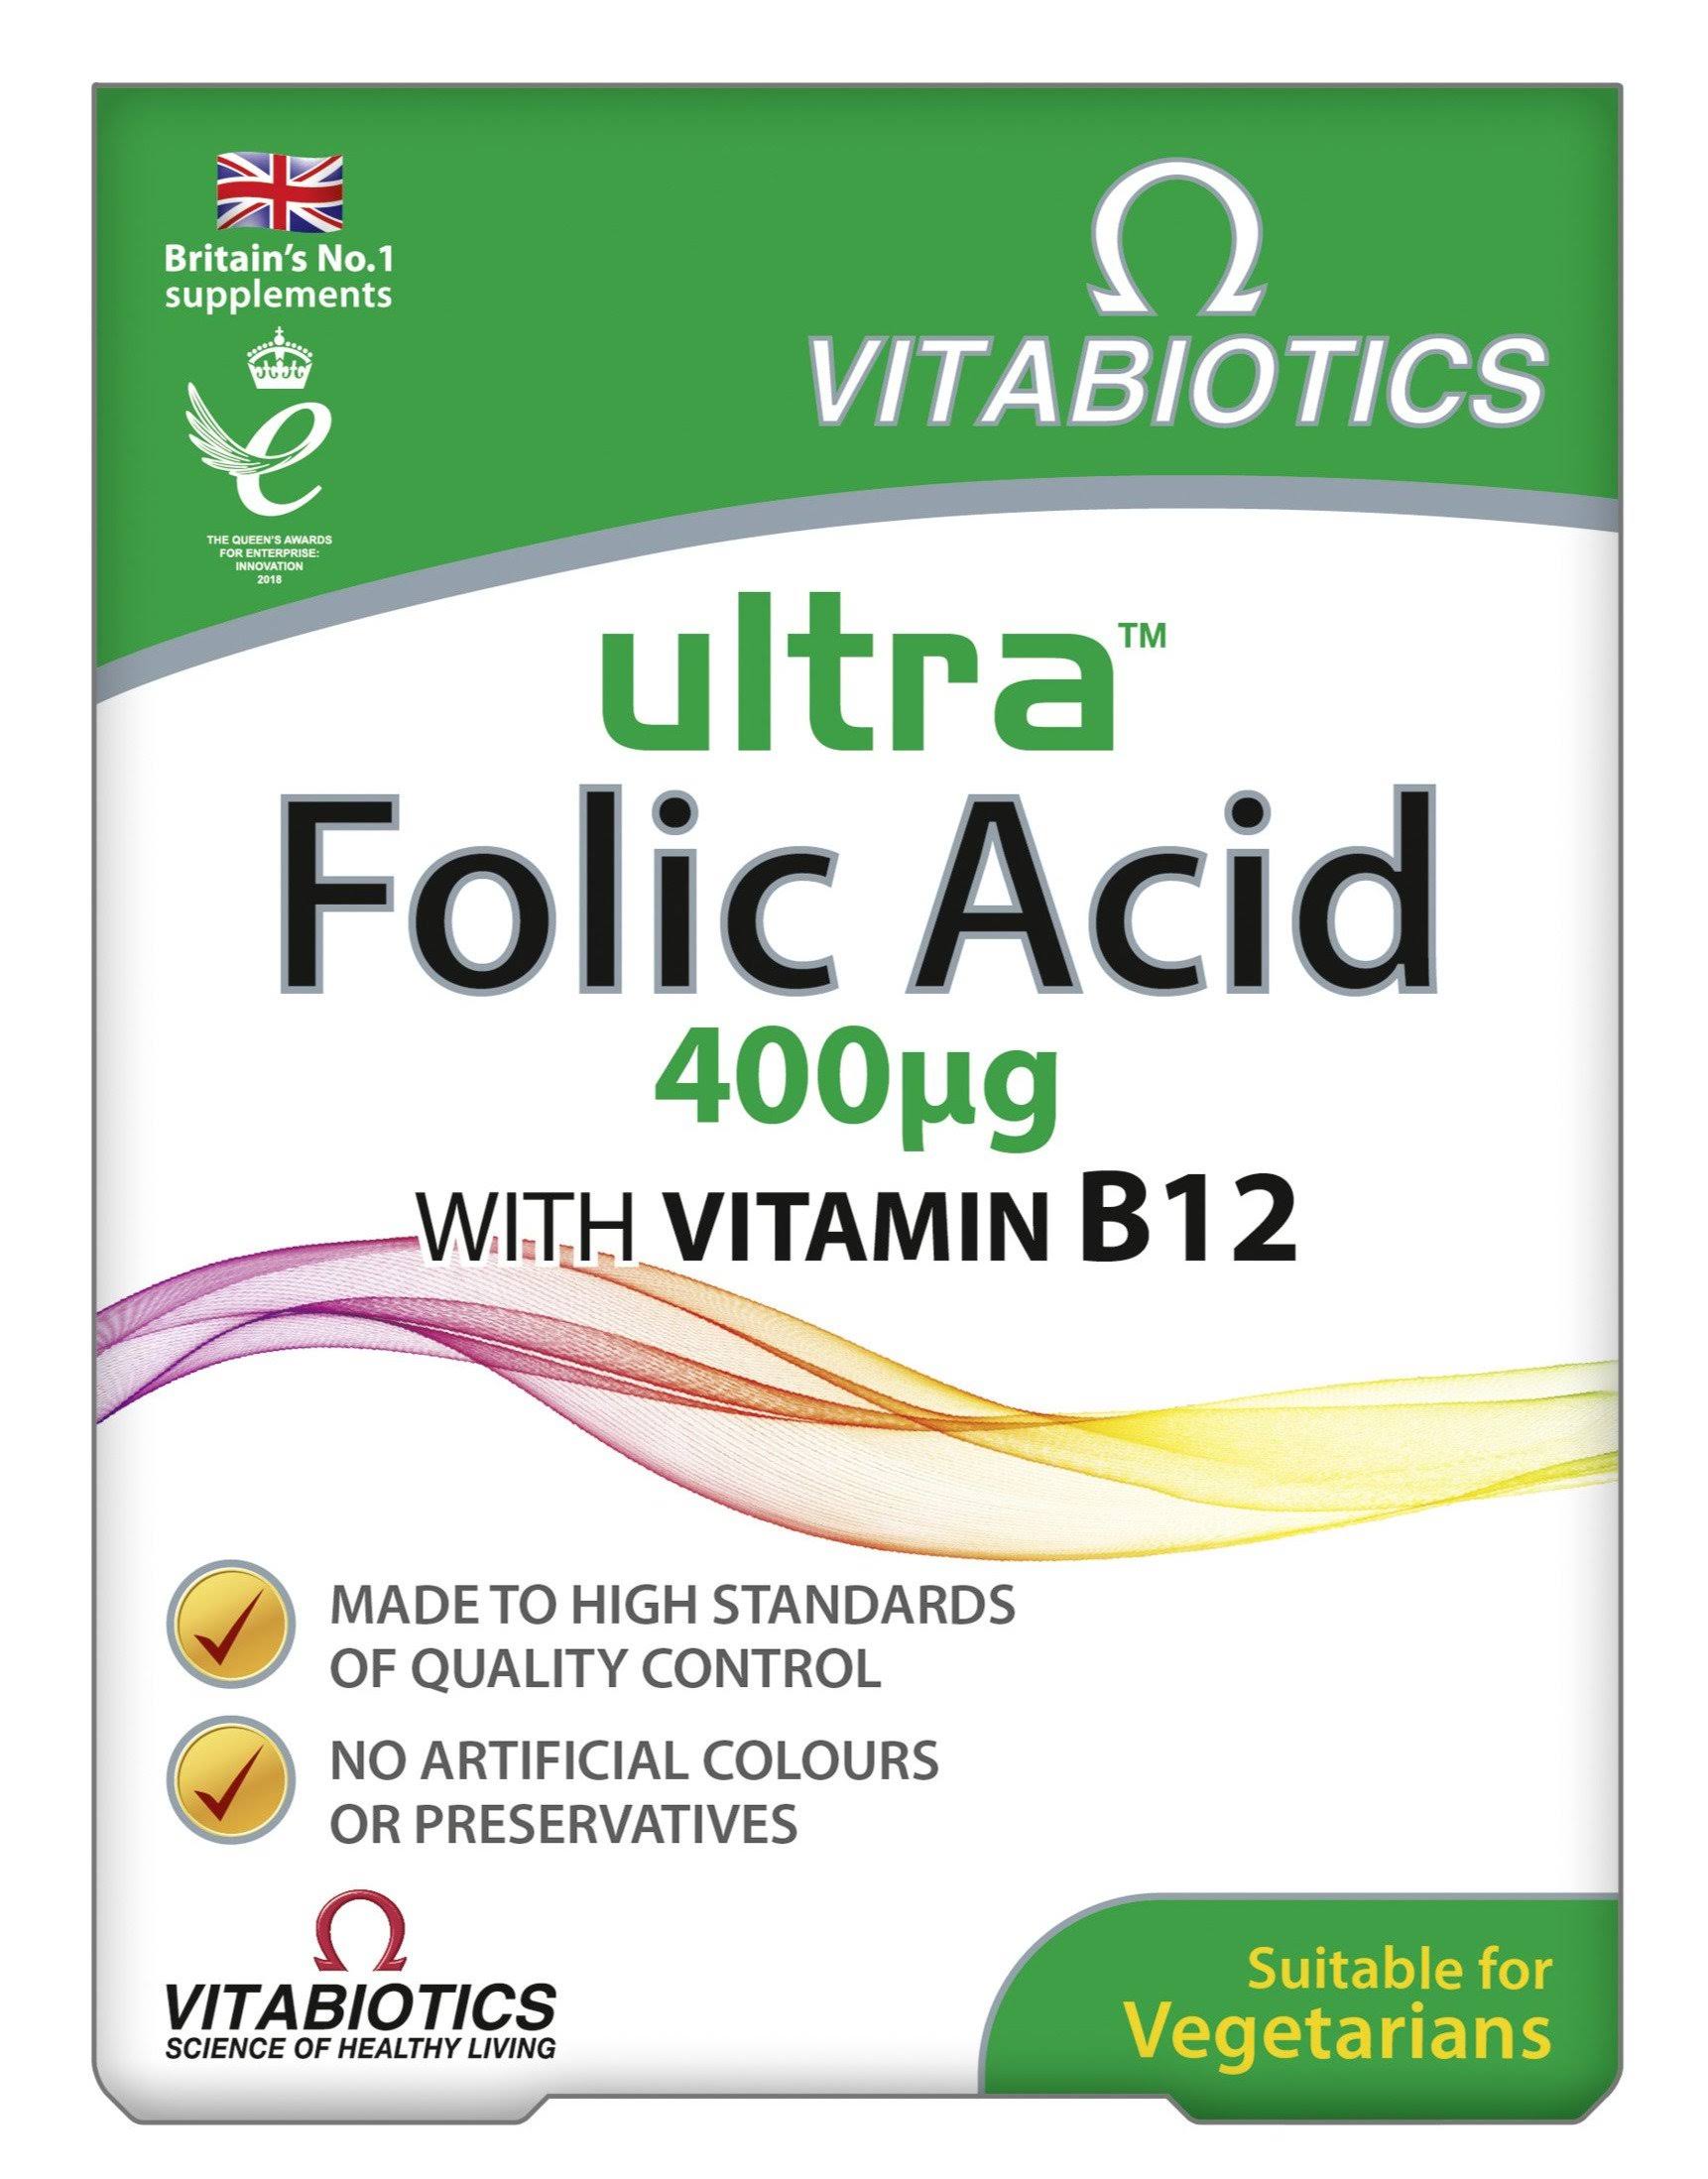 Vitabiotics Ultra Folic Acid Tablets - 60ct, 400mg